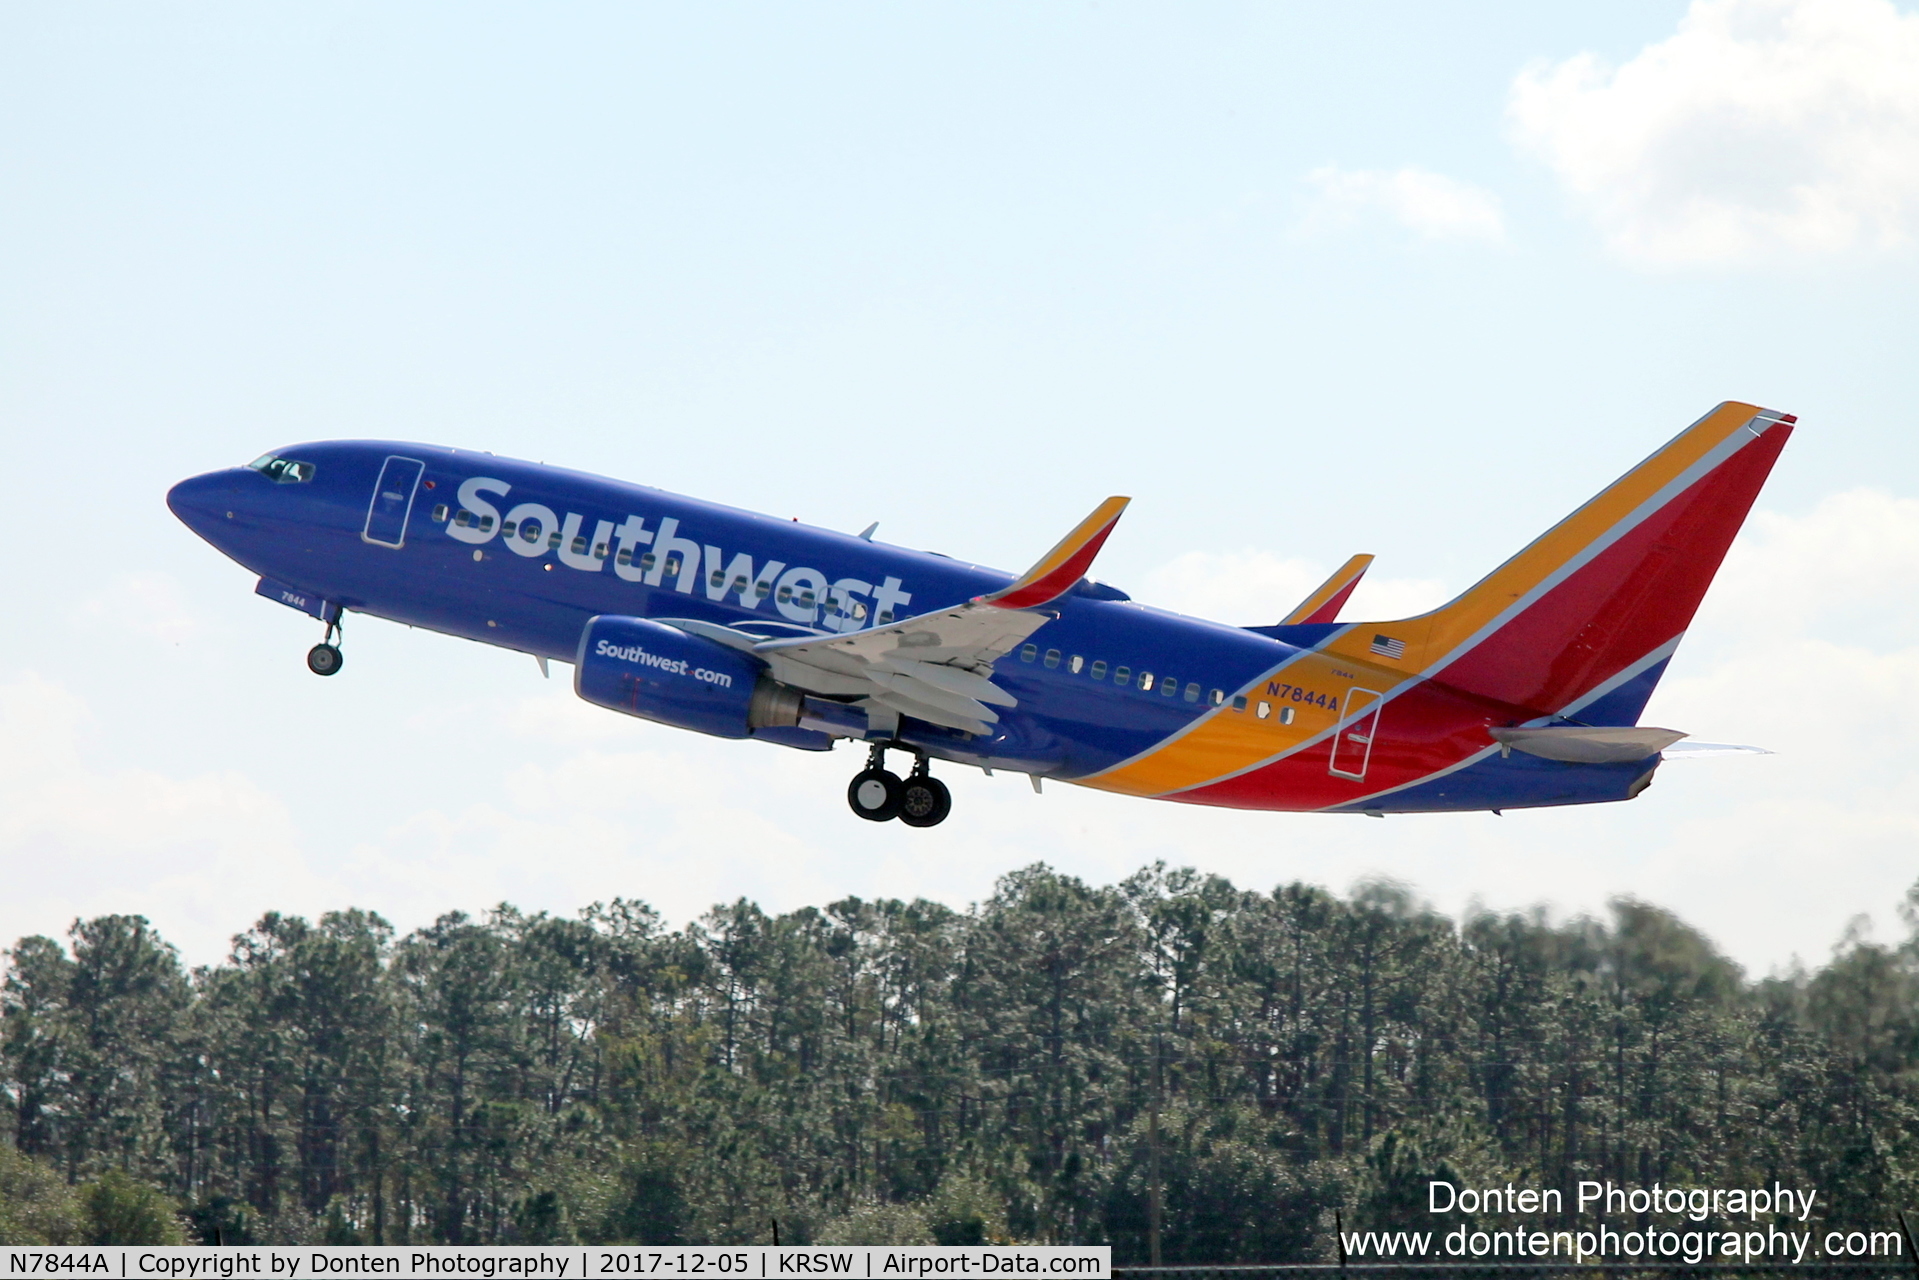 N7844A, 2006 Boeing 737-752 C/N 35118, Southwest Flight 460 (N7844A) departs Runway 6 at Southwest Florida International Airport enroute to Bradley International Airport